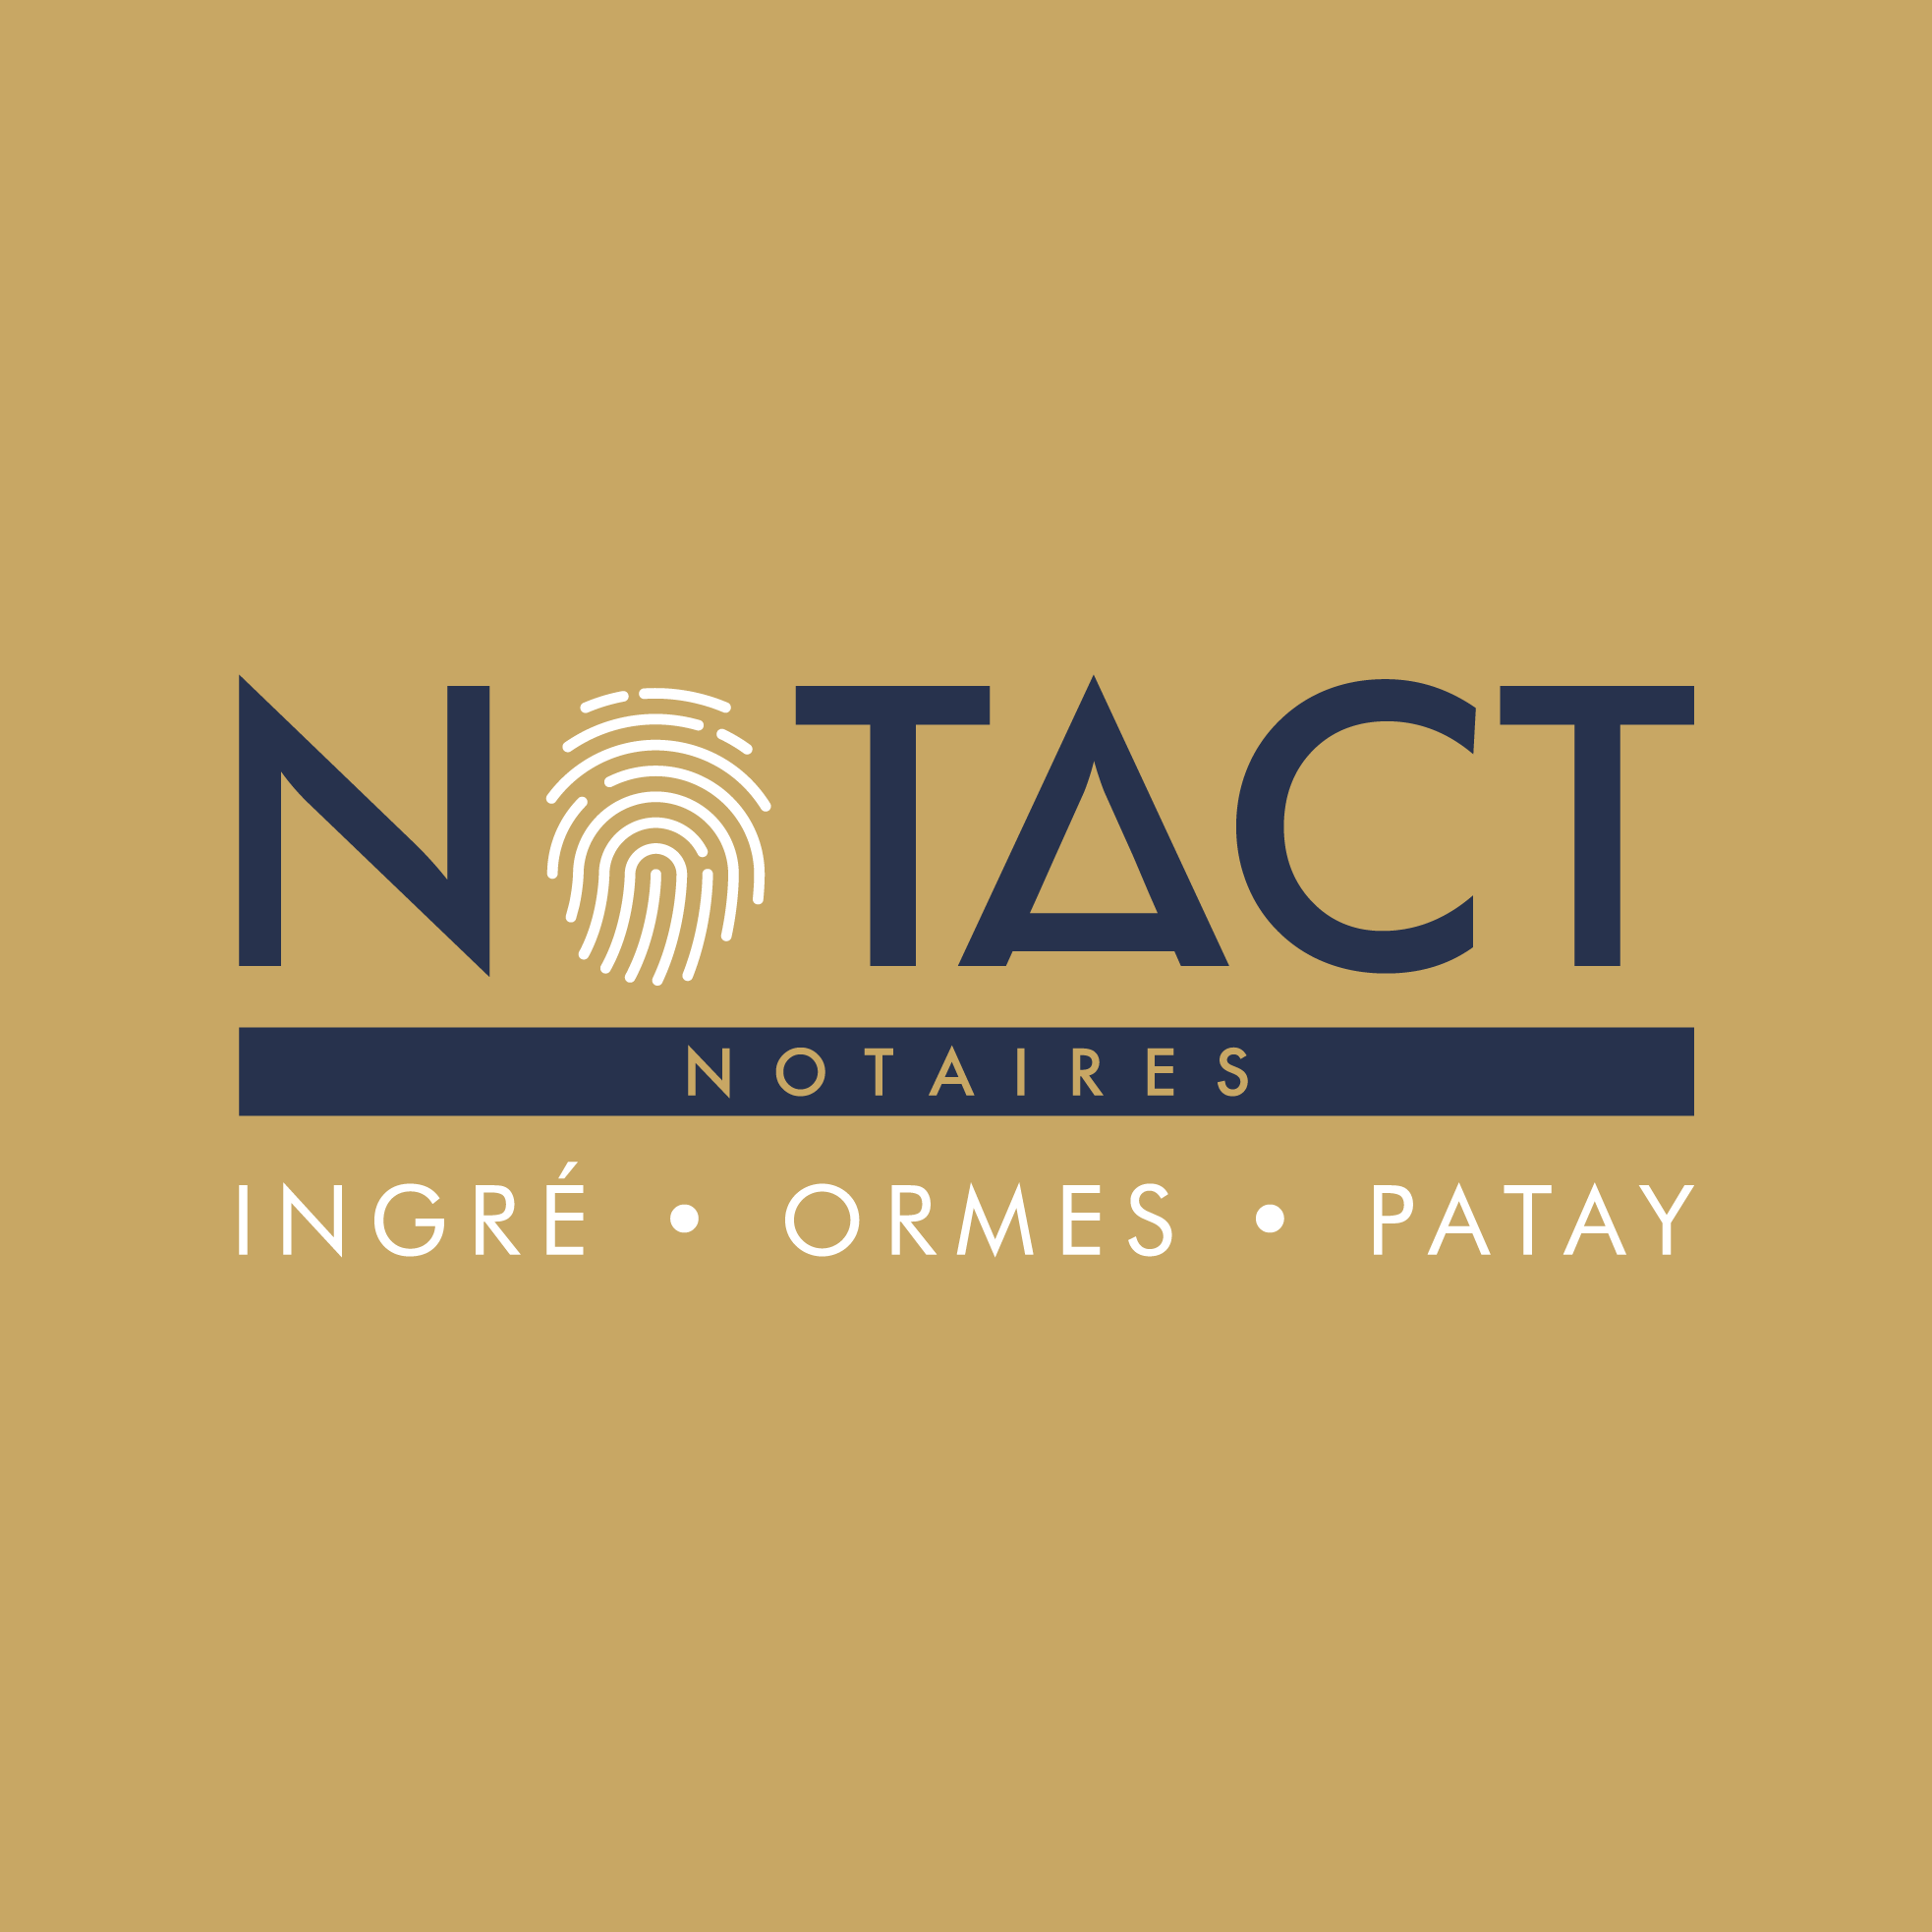 Notact